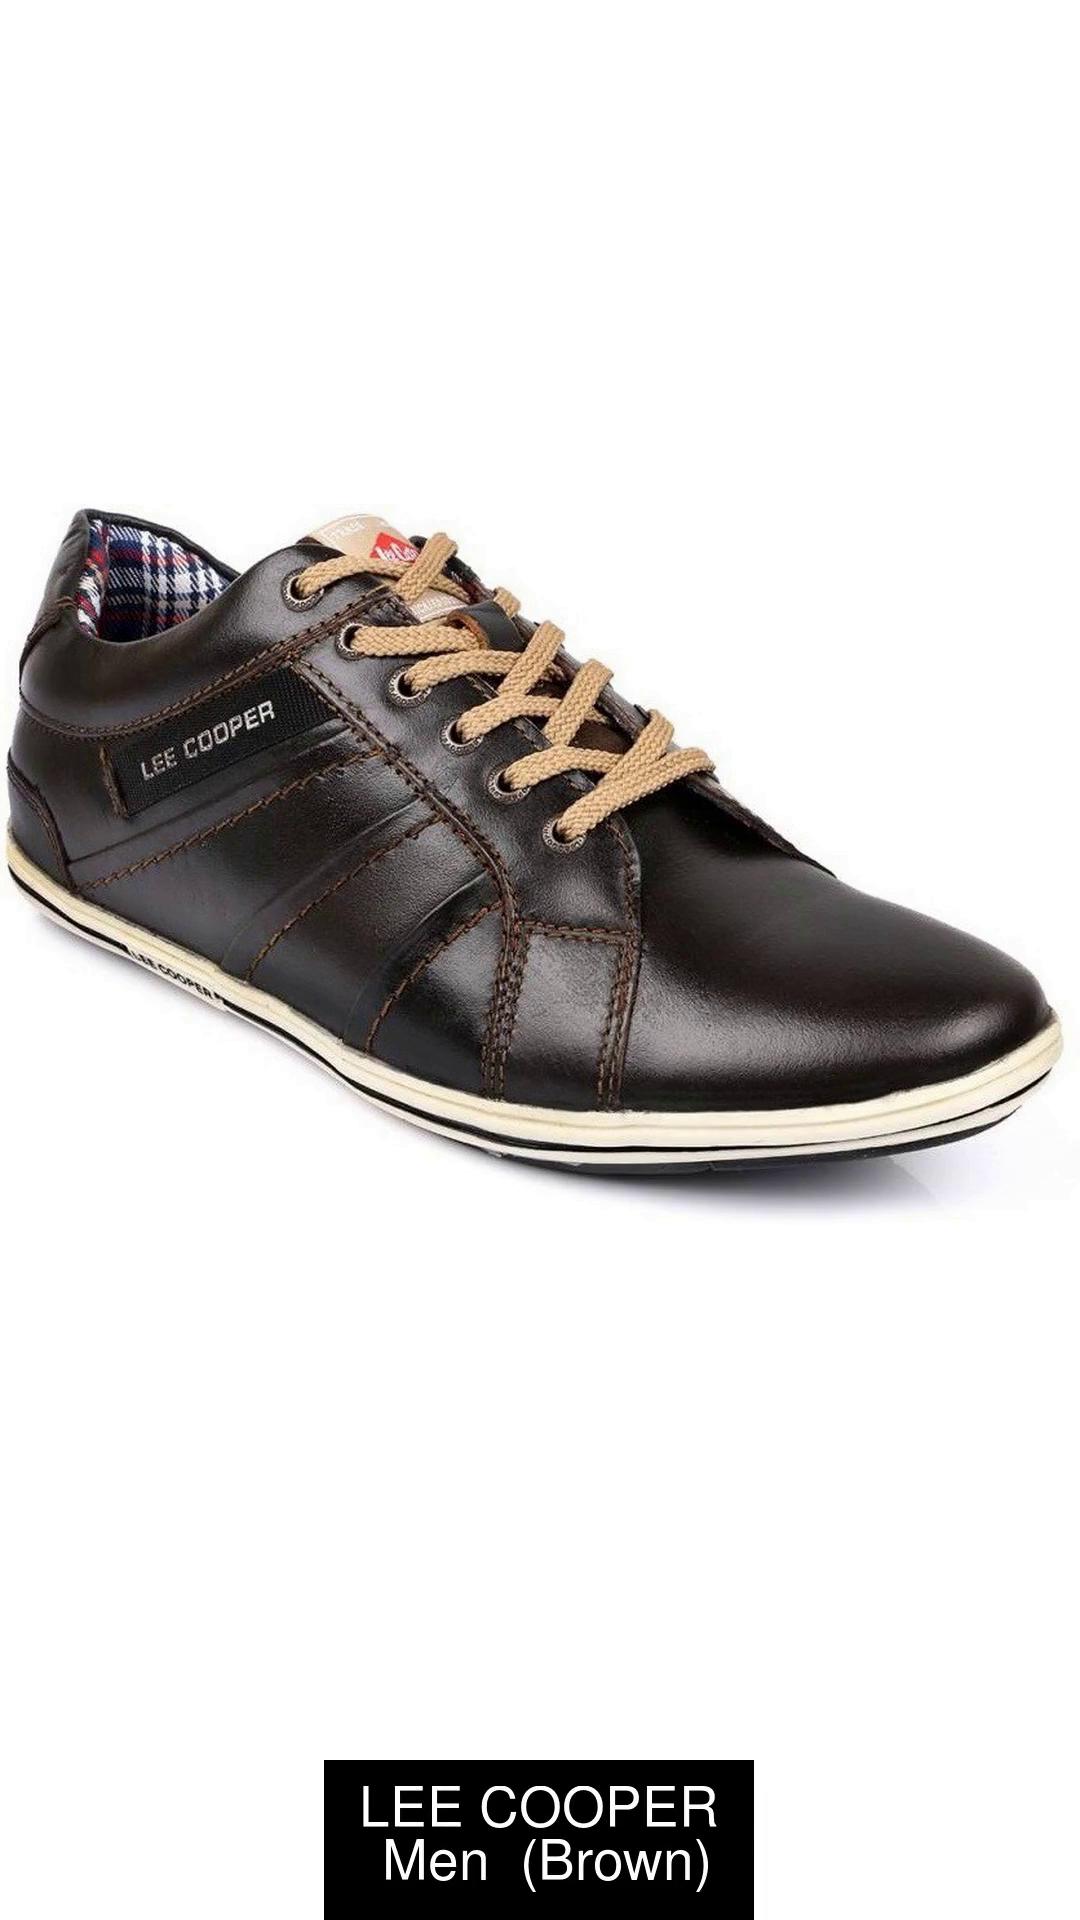 LEE COOPER Sneakers For Men - Buy LEE COOPER Sneakers For Men Online at Best Price - Shop Online for Footwears in India |